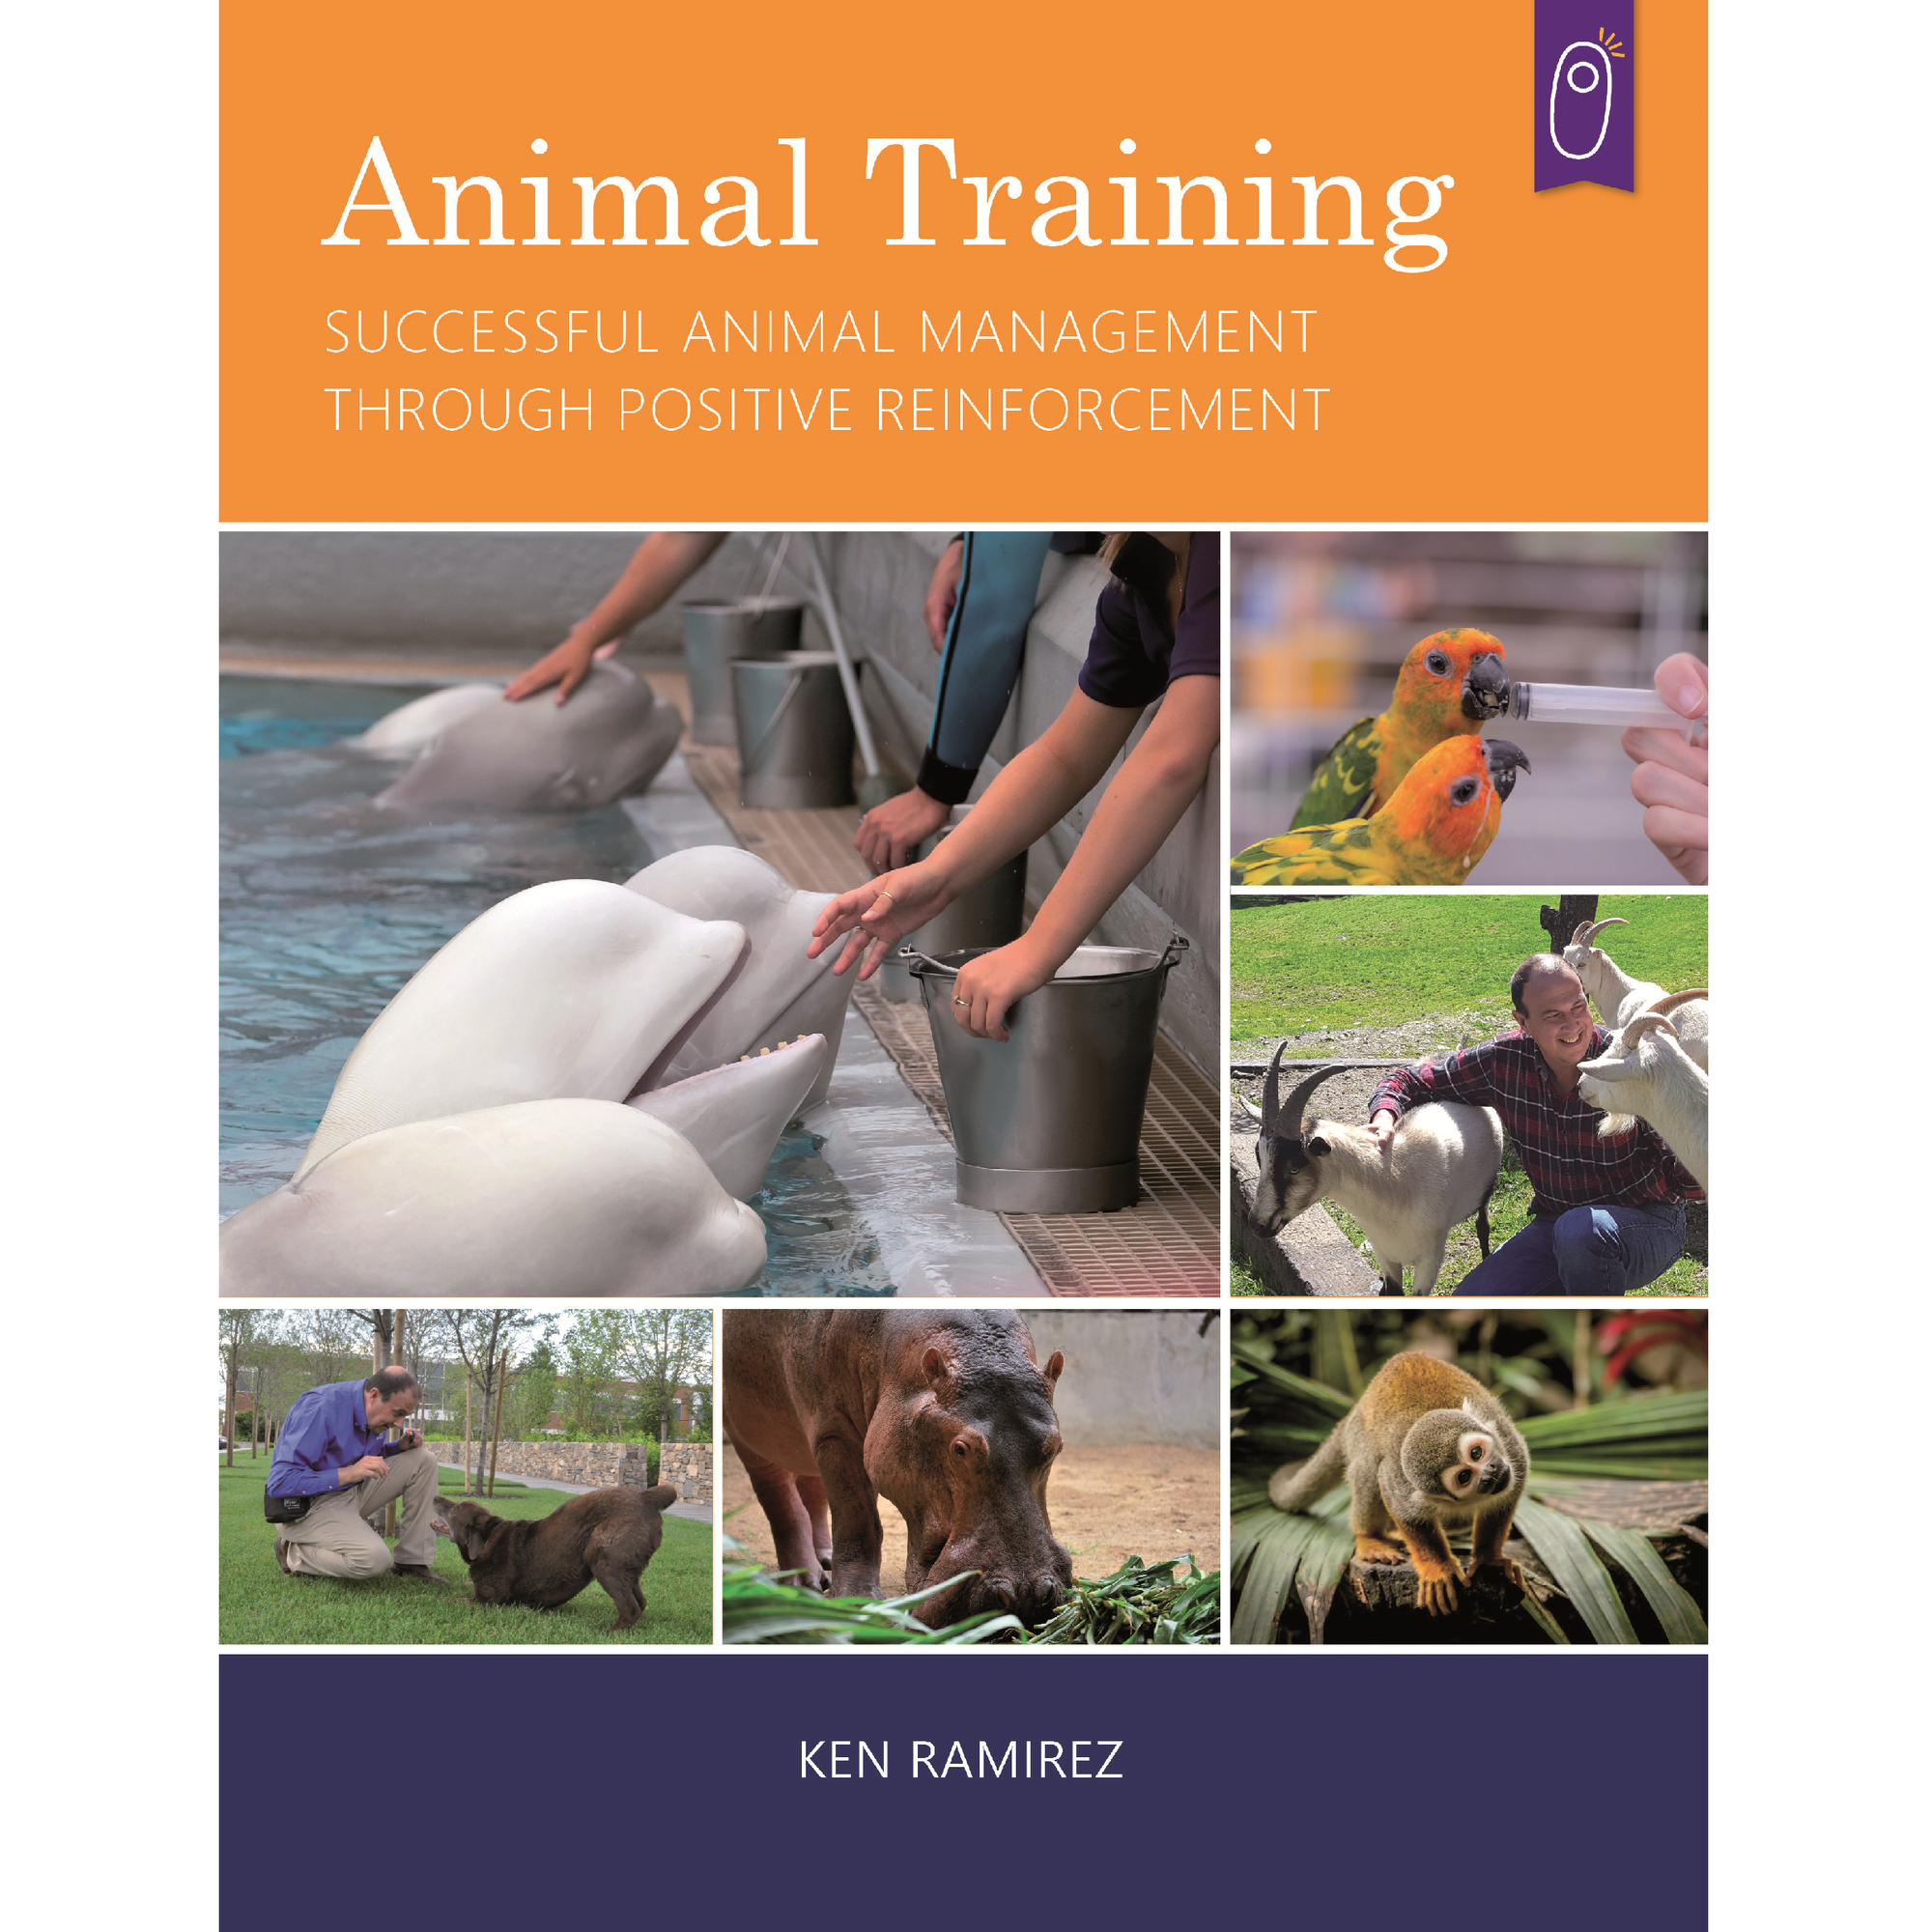 Animal Training: Successful Animal Management Through Positive Reinforcement by Ken Ramirez